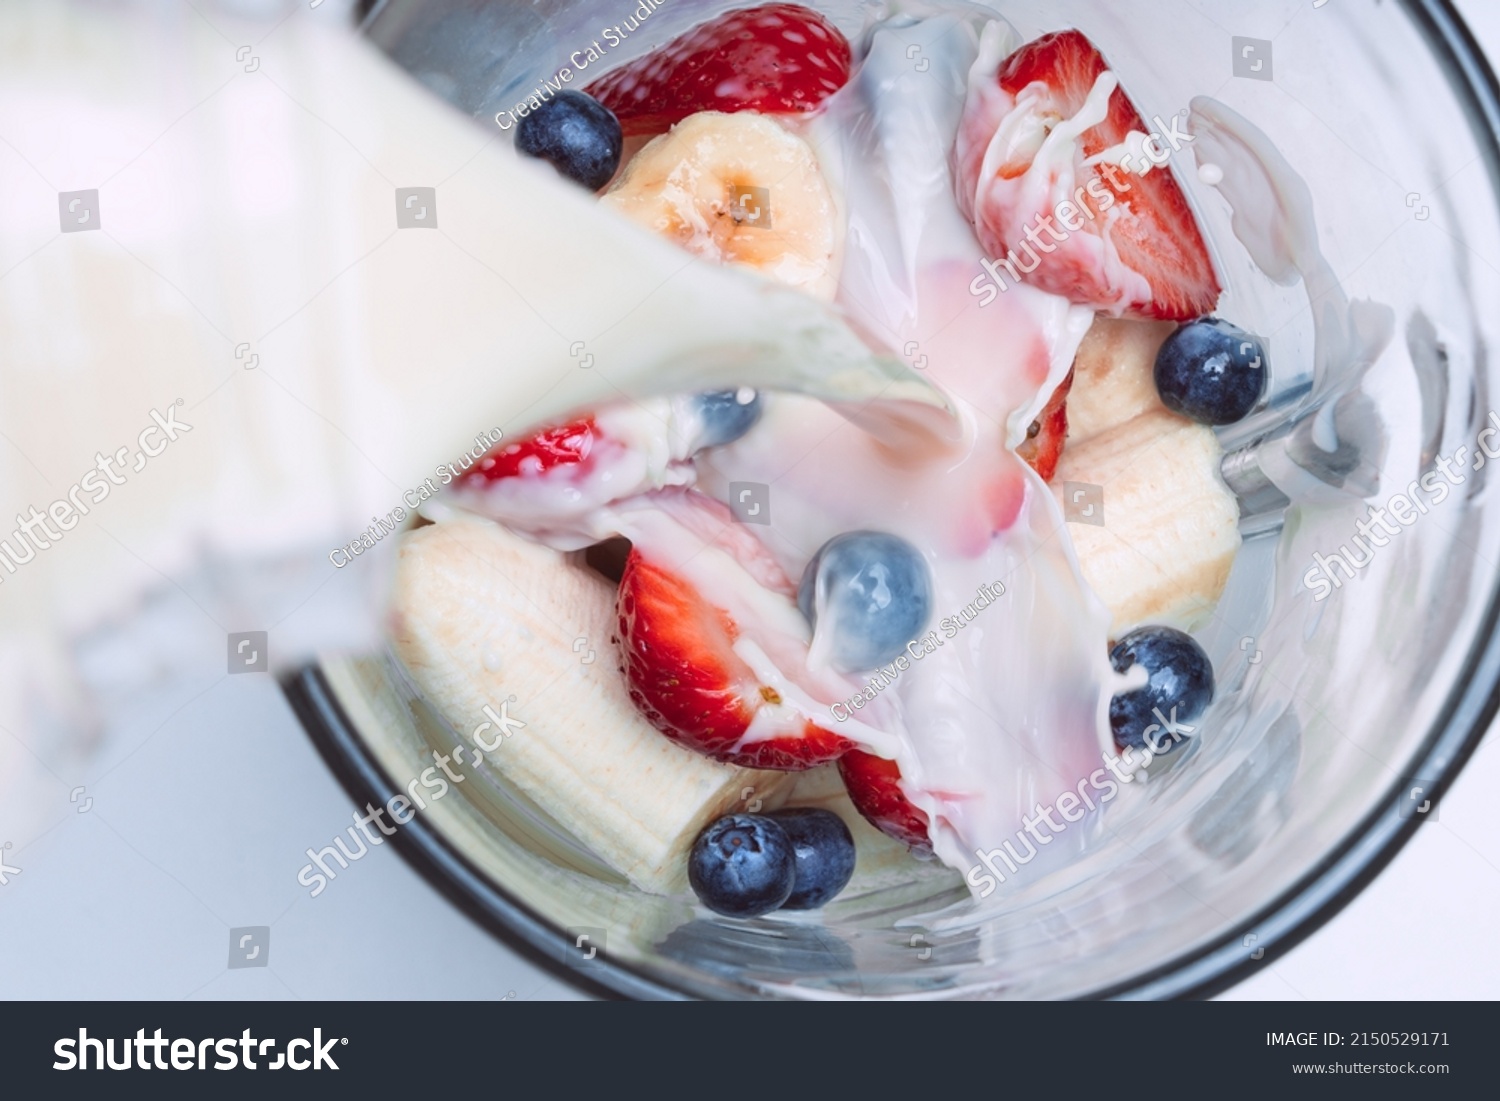 Making smoothie or milkshake in blender. Pouring milk in a blender with fruits. Vegan smoothie with almond milk #2150529171